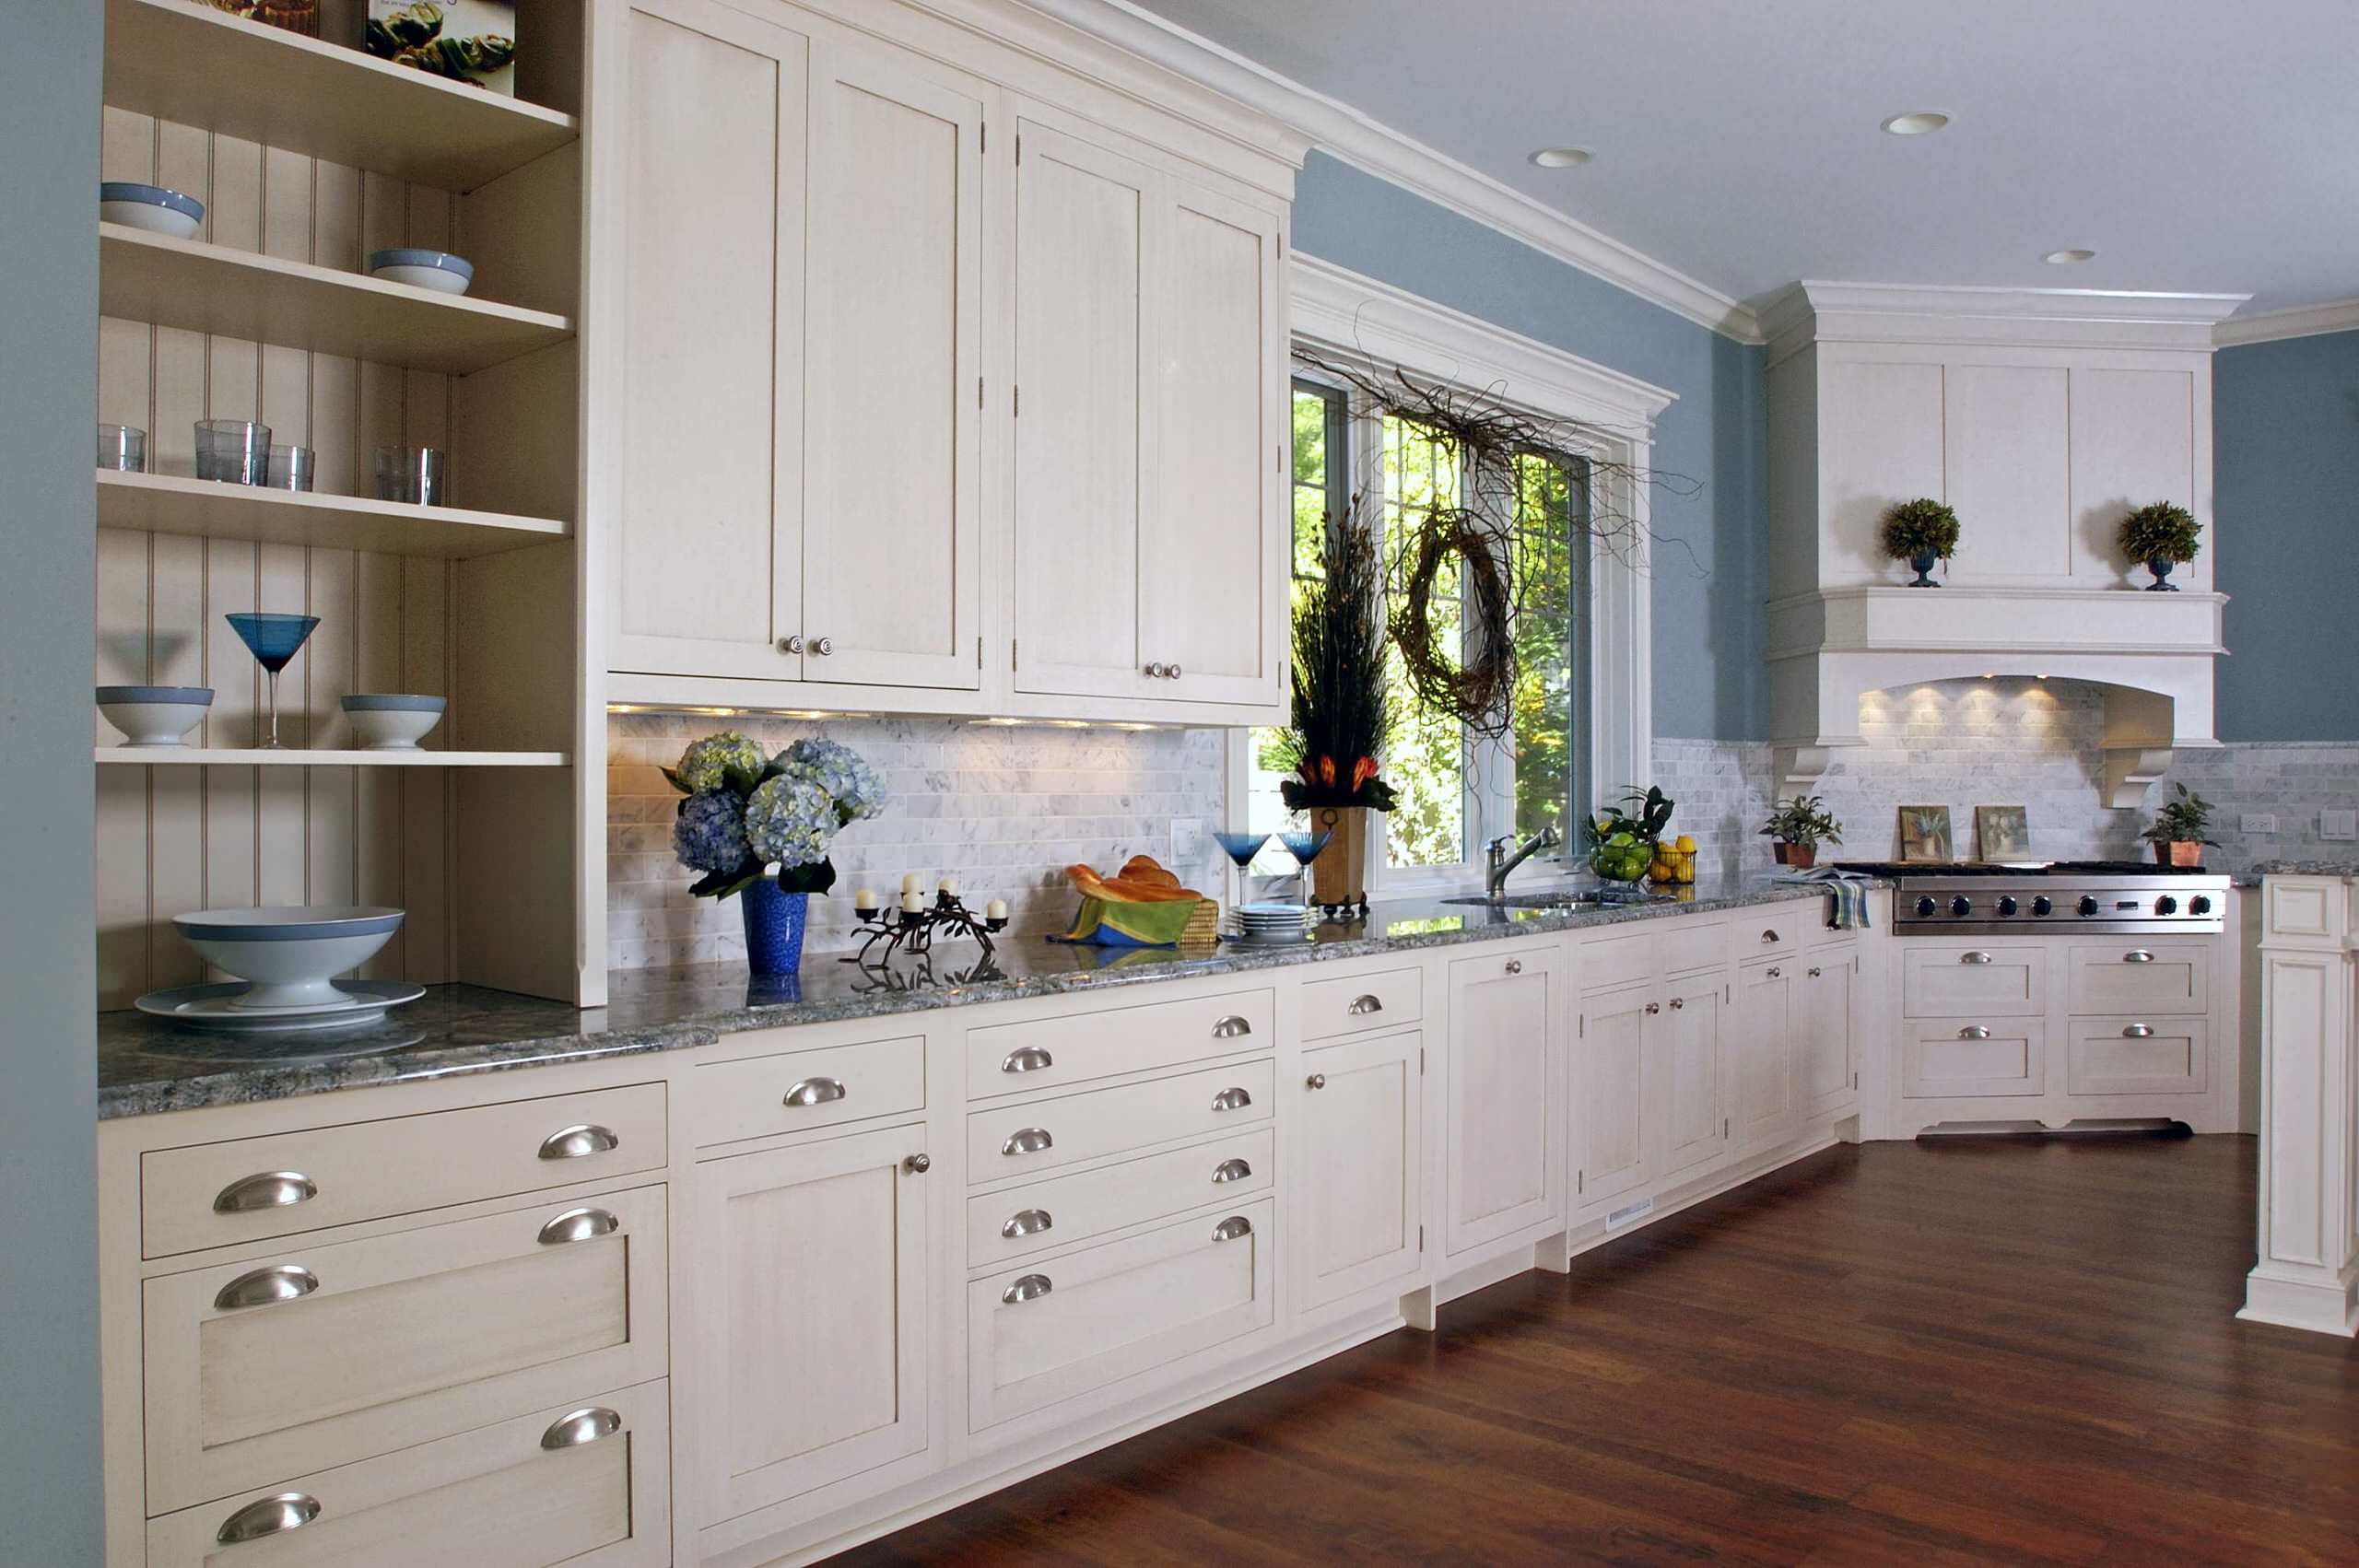 What type of back splash is thisceramic tile? - Houzz  White kitchen  design, Kitchen backsplash designs, Kitchen design